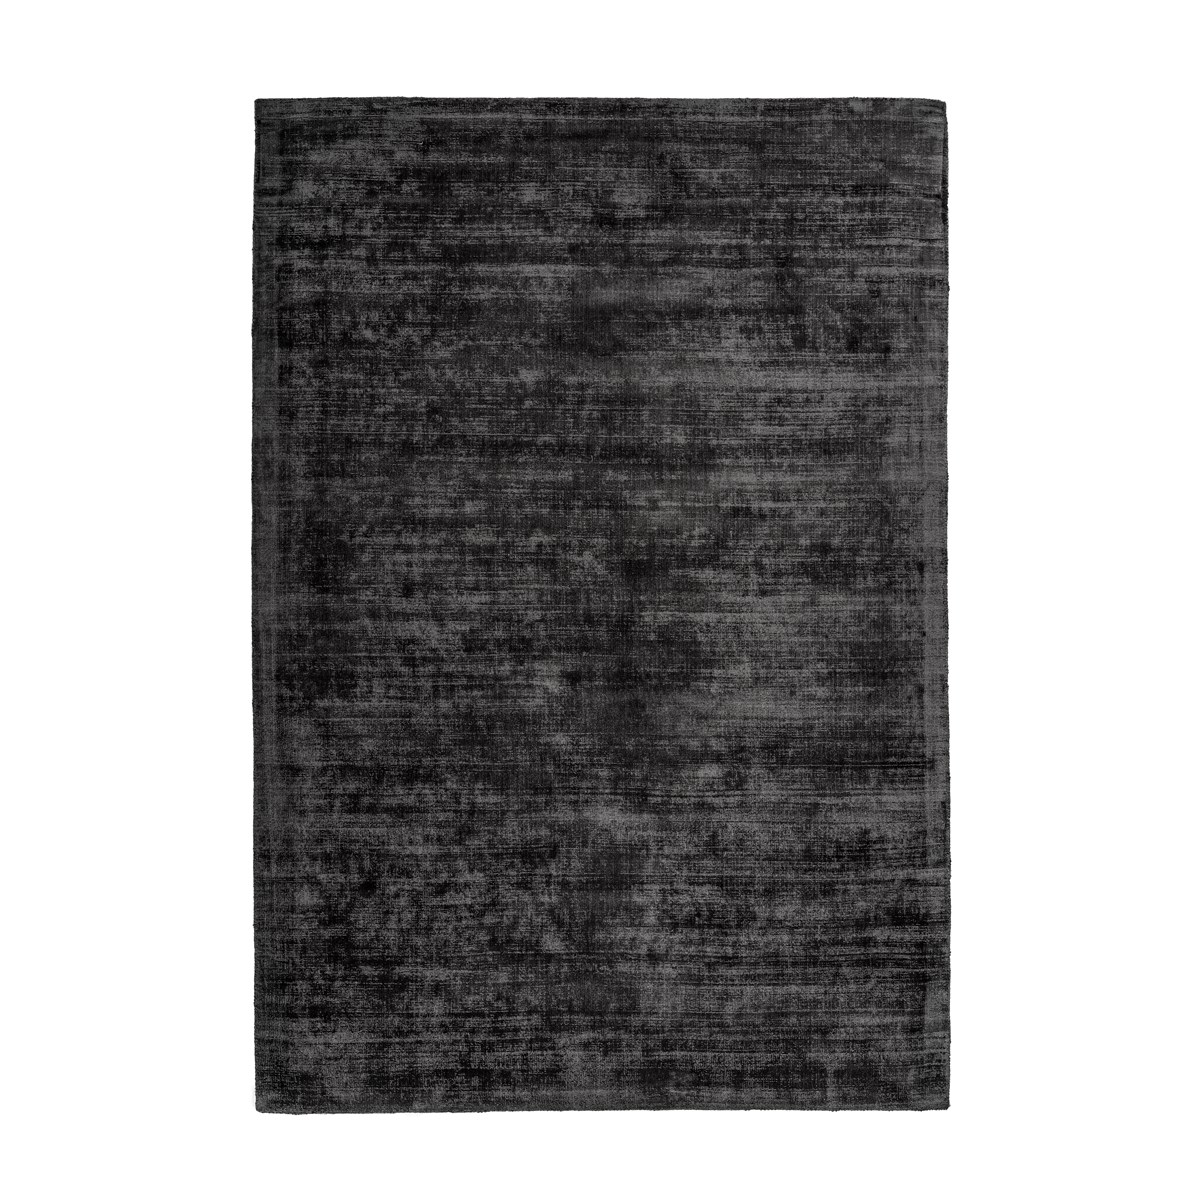 Tapis moderne en Soie Gris anthracite 160x230 cm